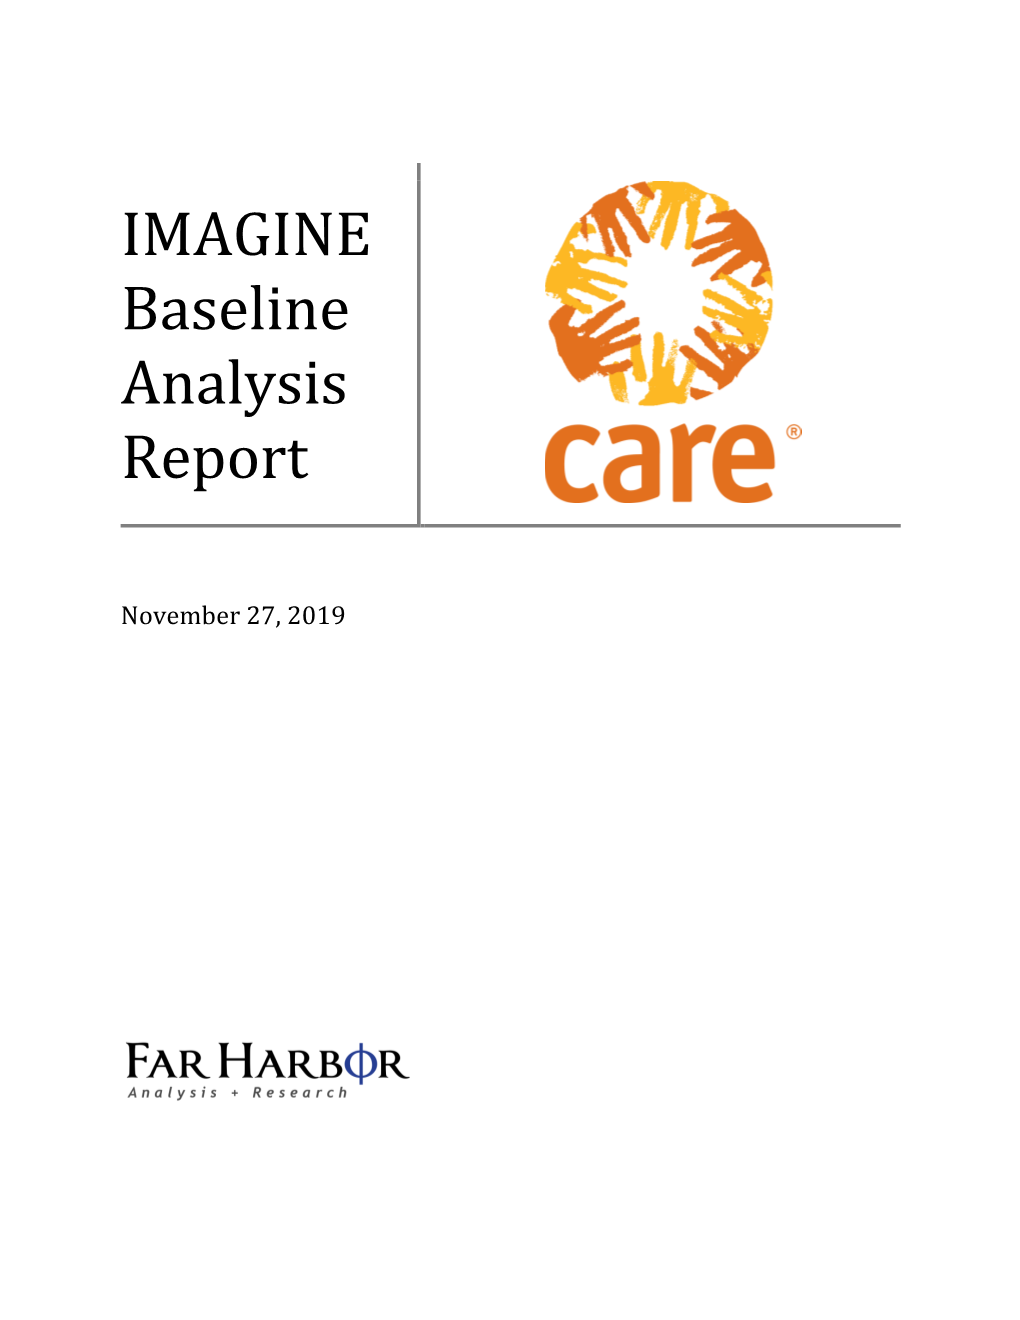 IMAGINE Baseline Analysis Report